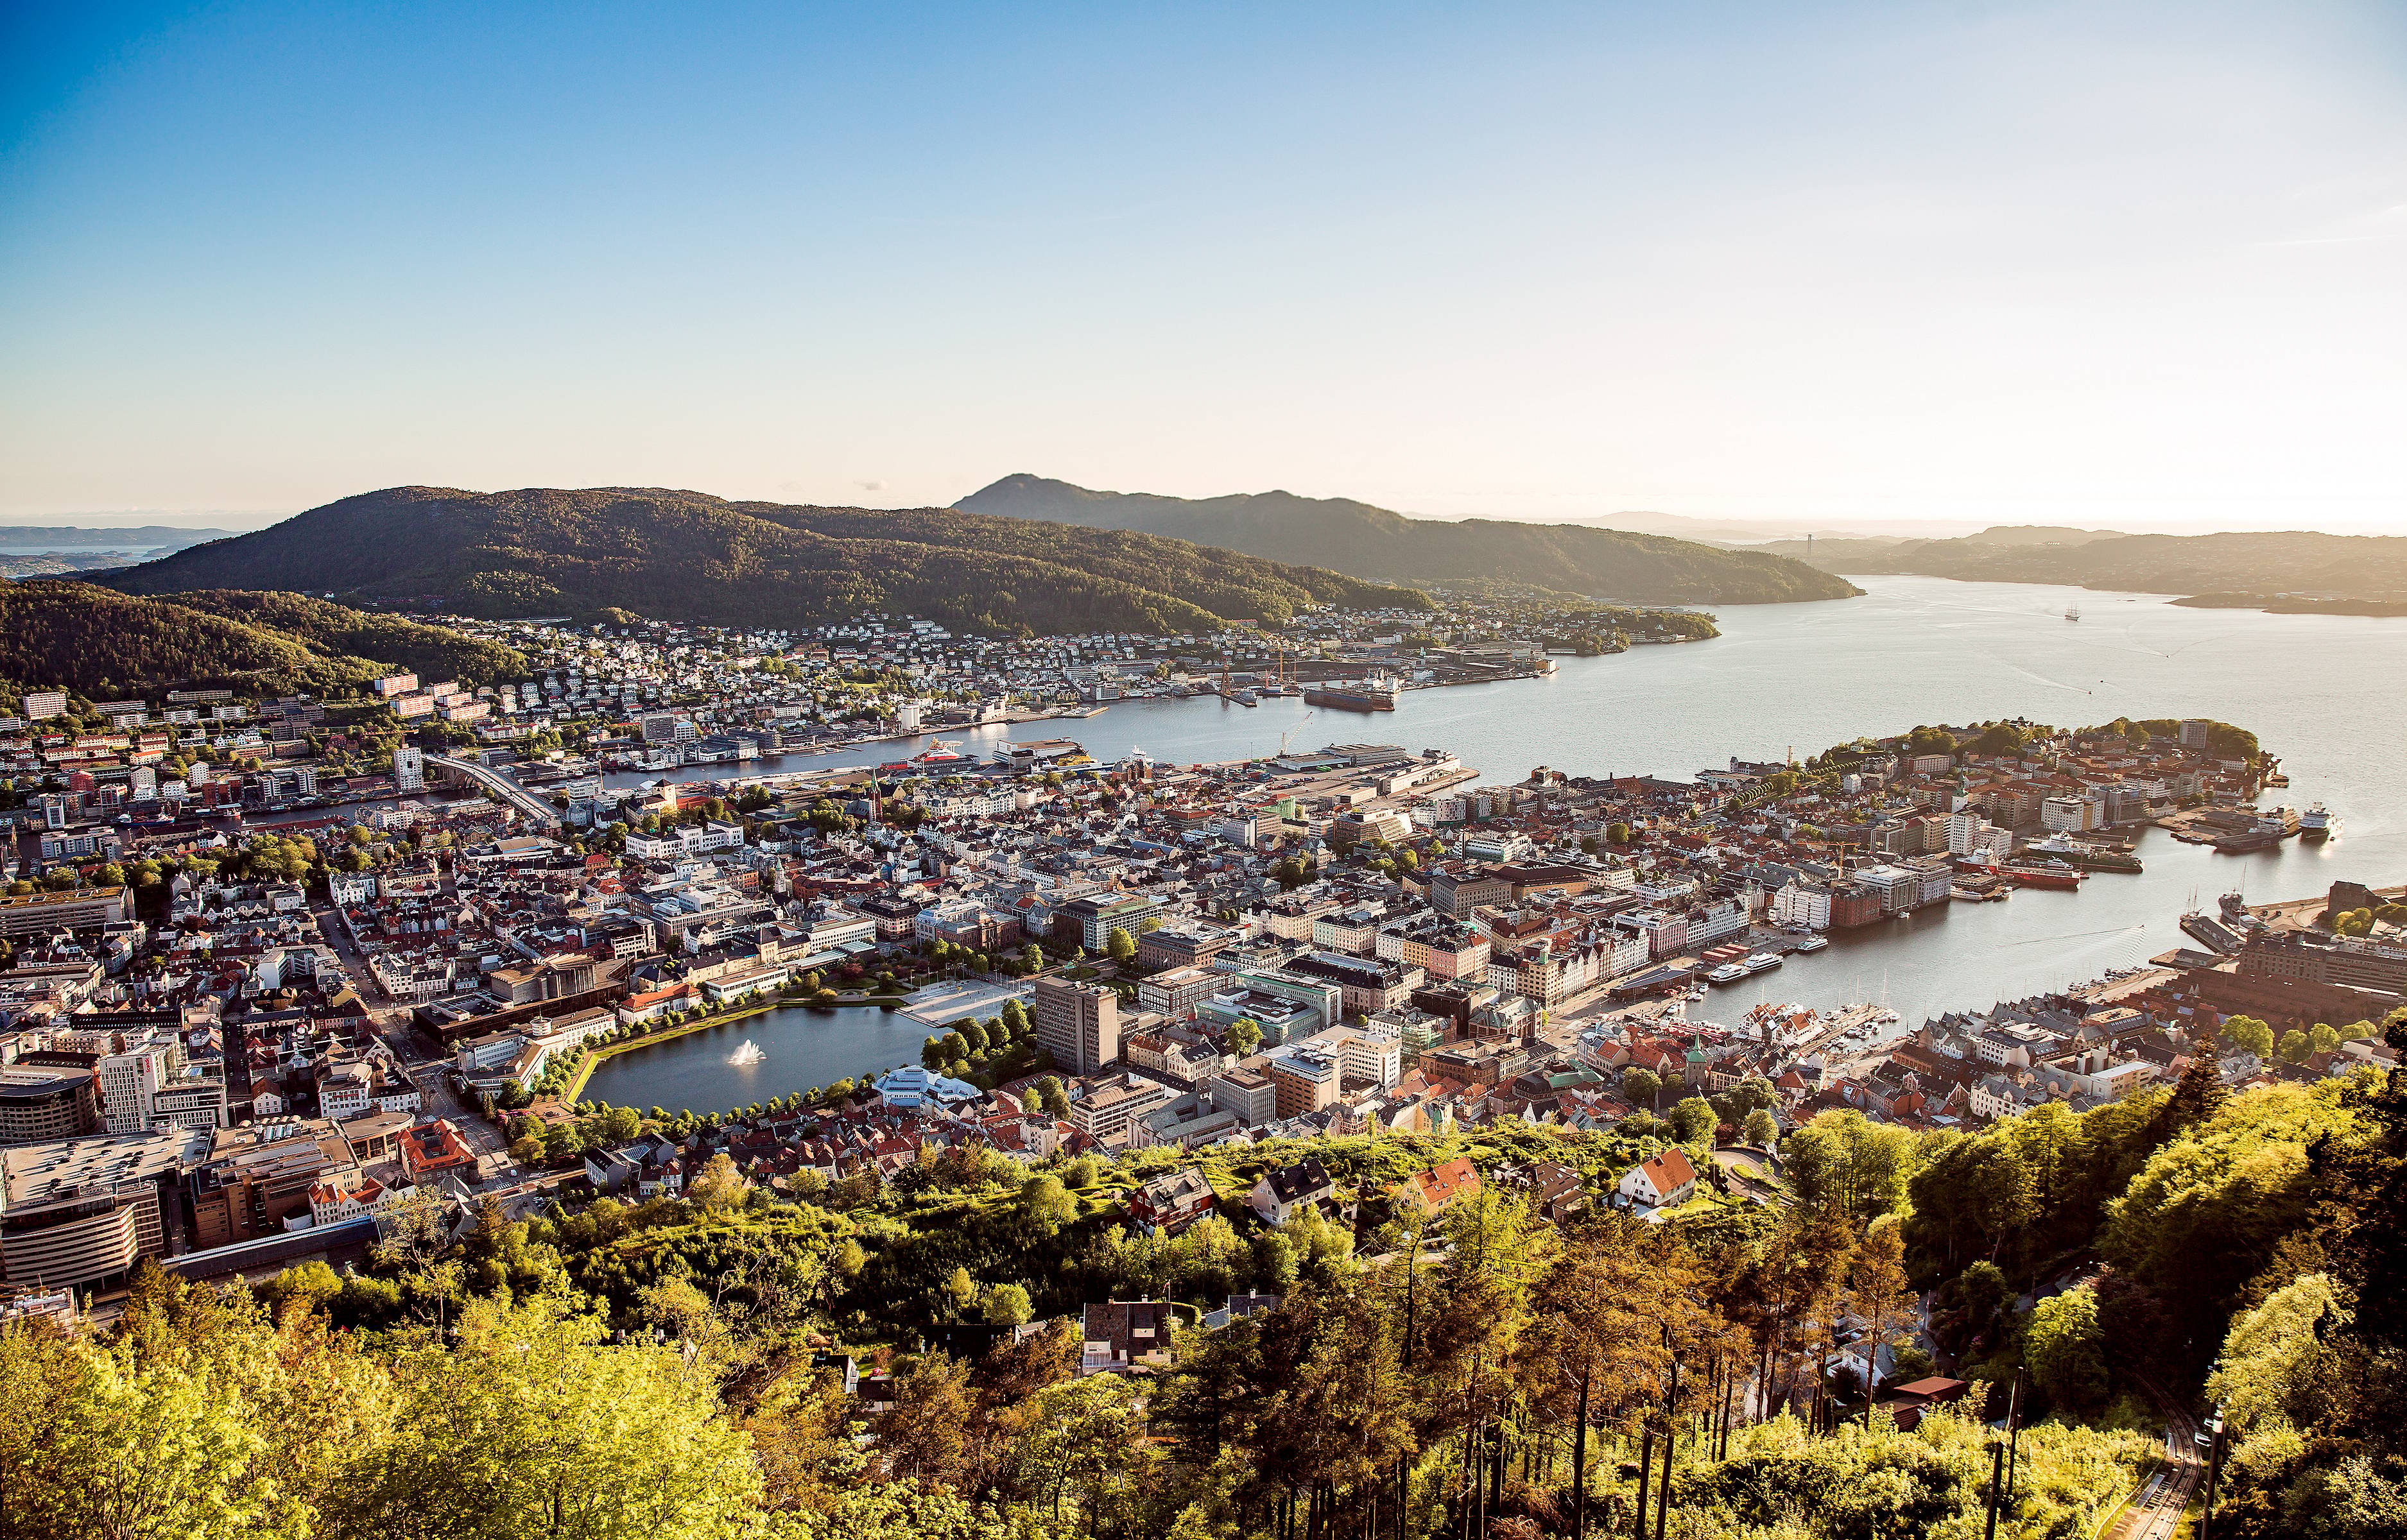 Bergen - Fin de la estancia